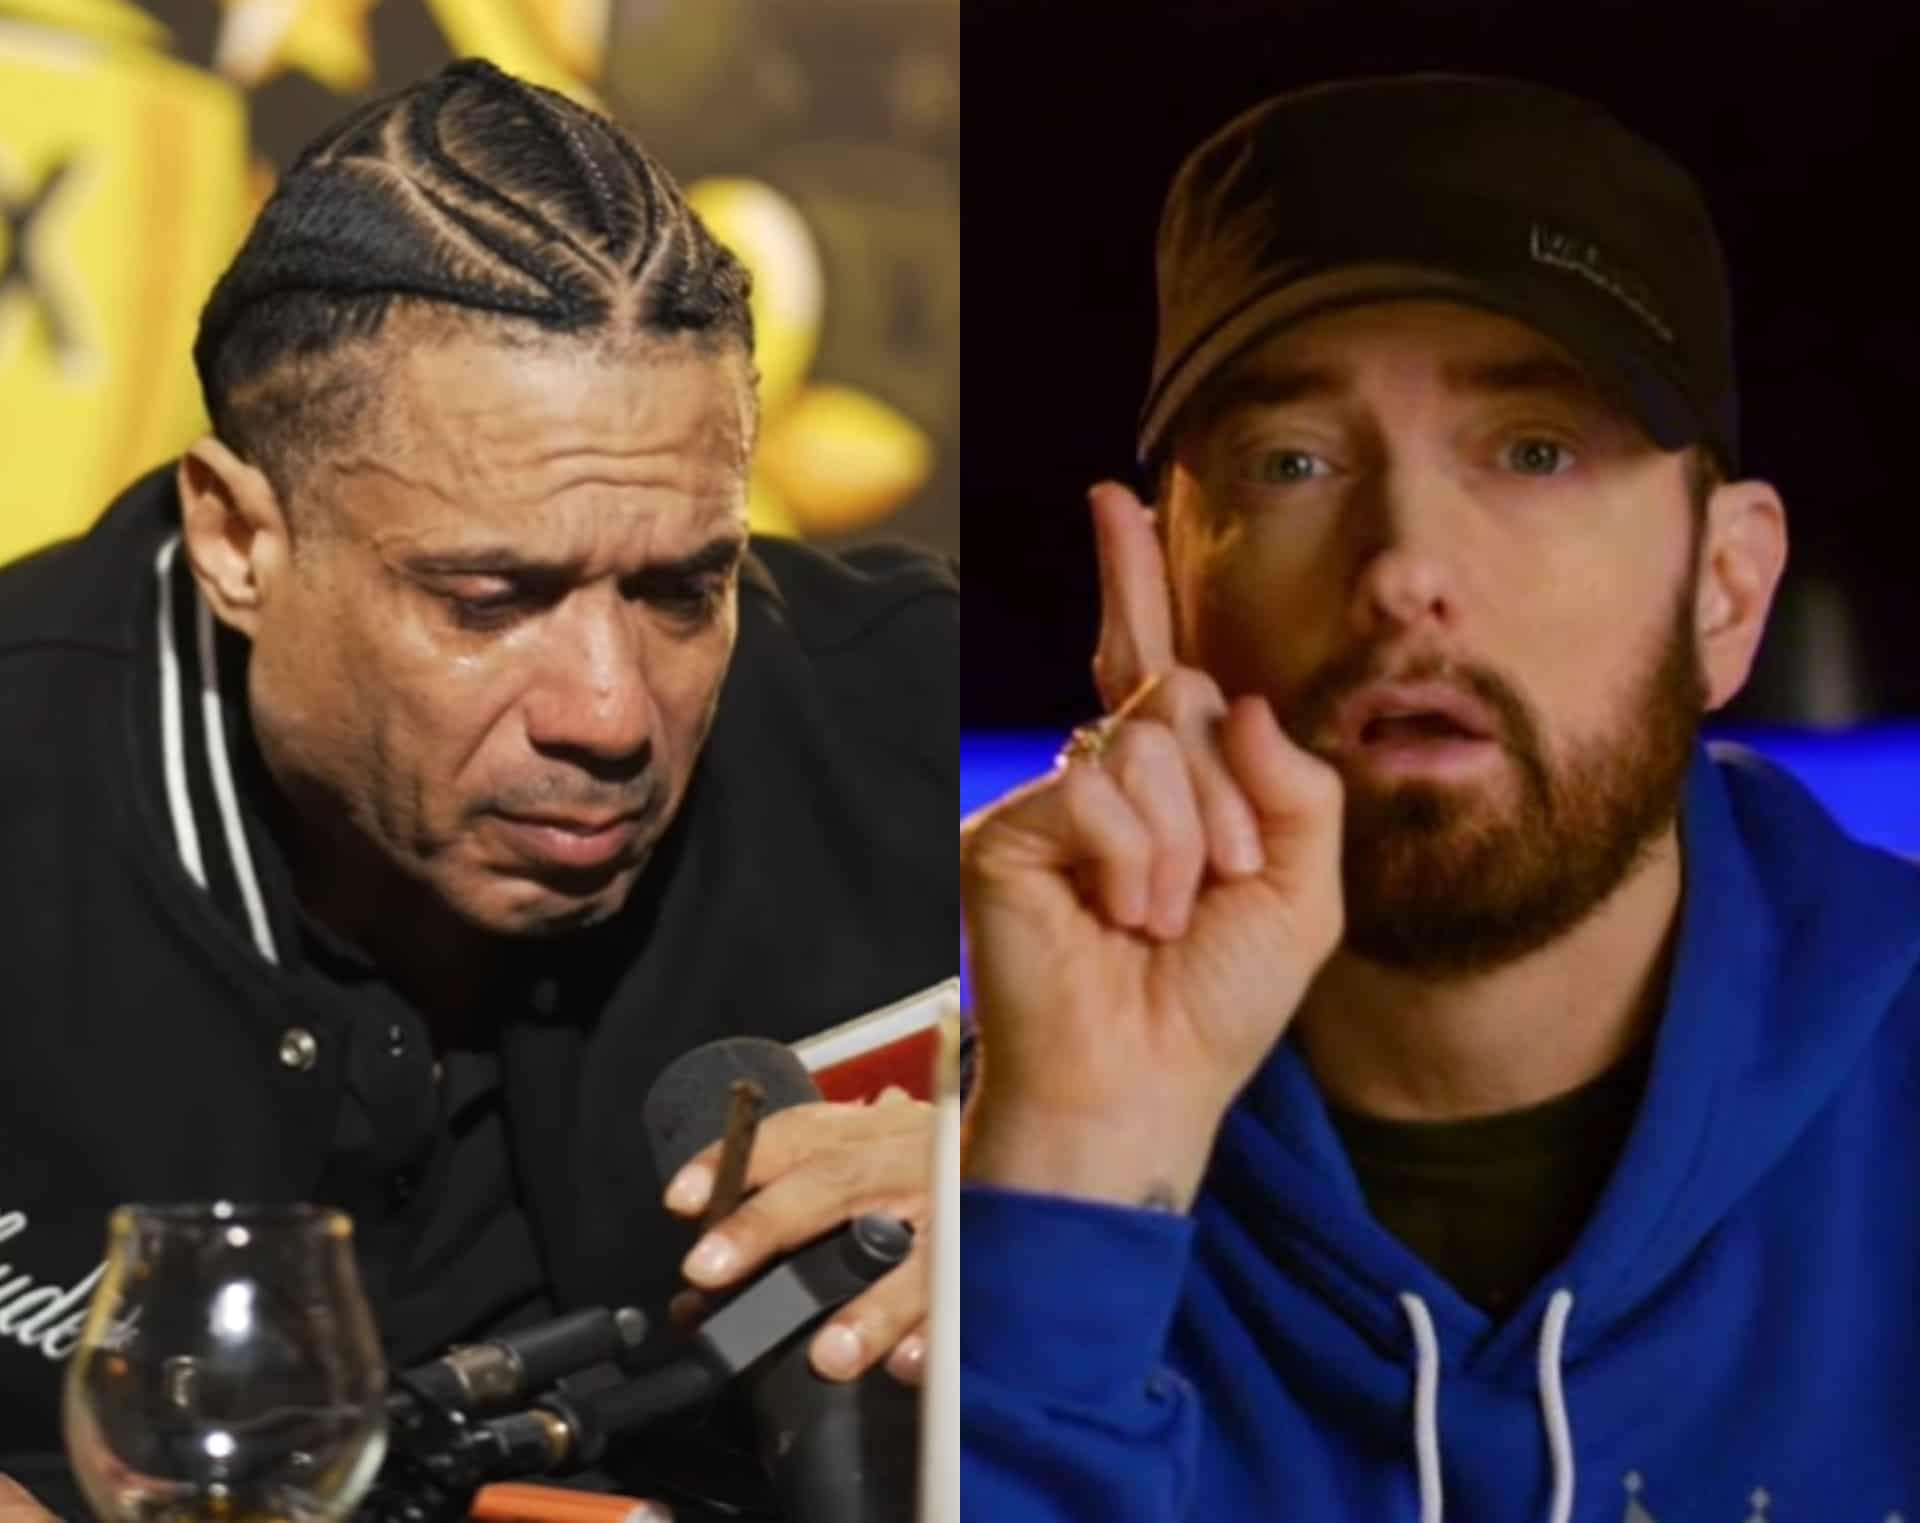 Benzino Breaks Down As He Addresses Beef With Eminem I Don't Hate Eminem